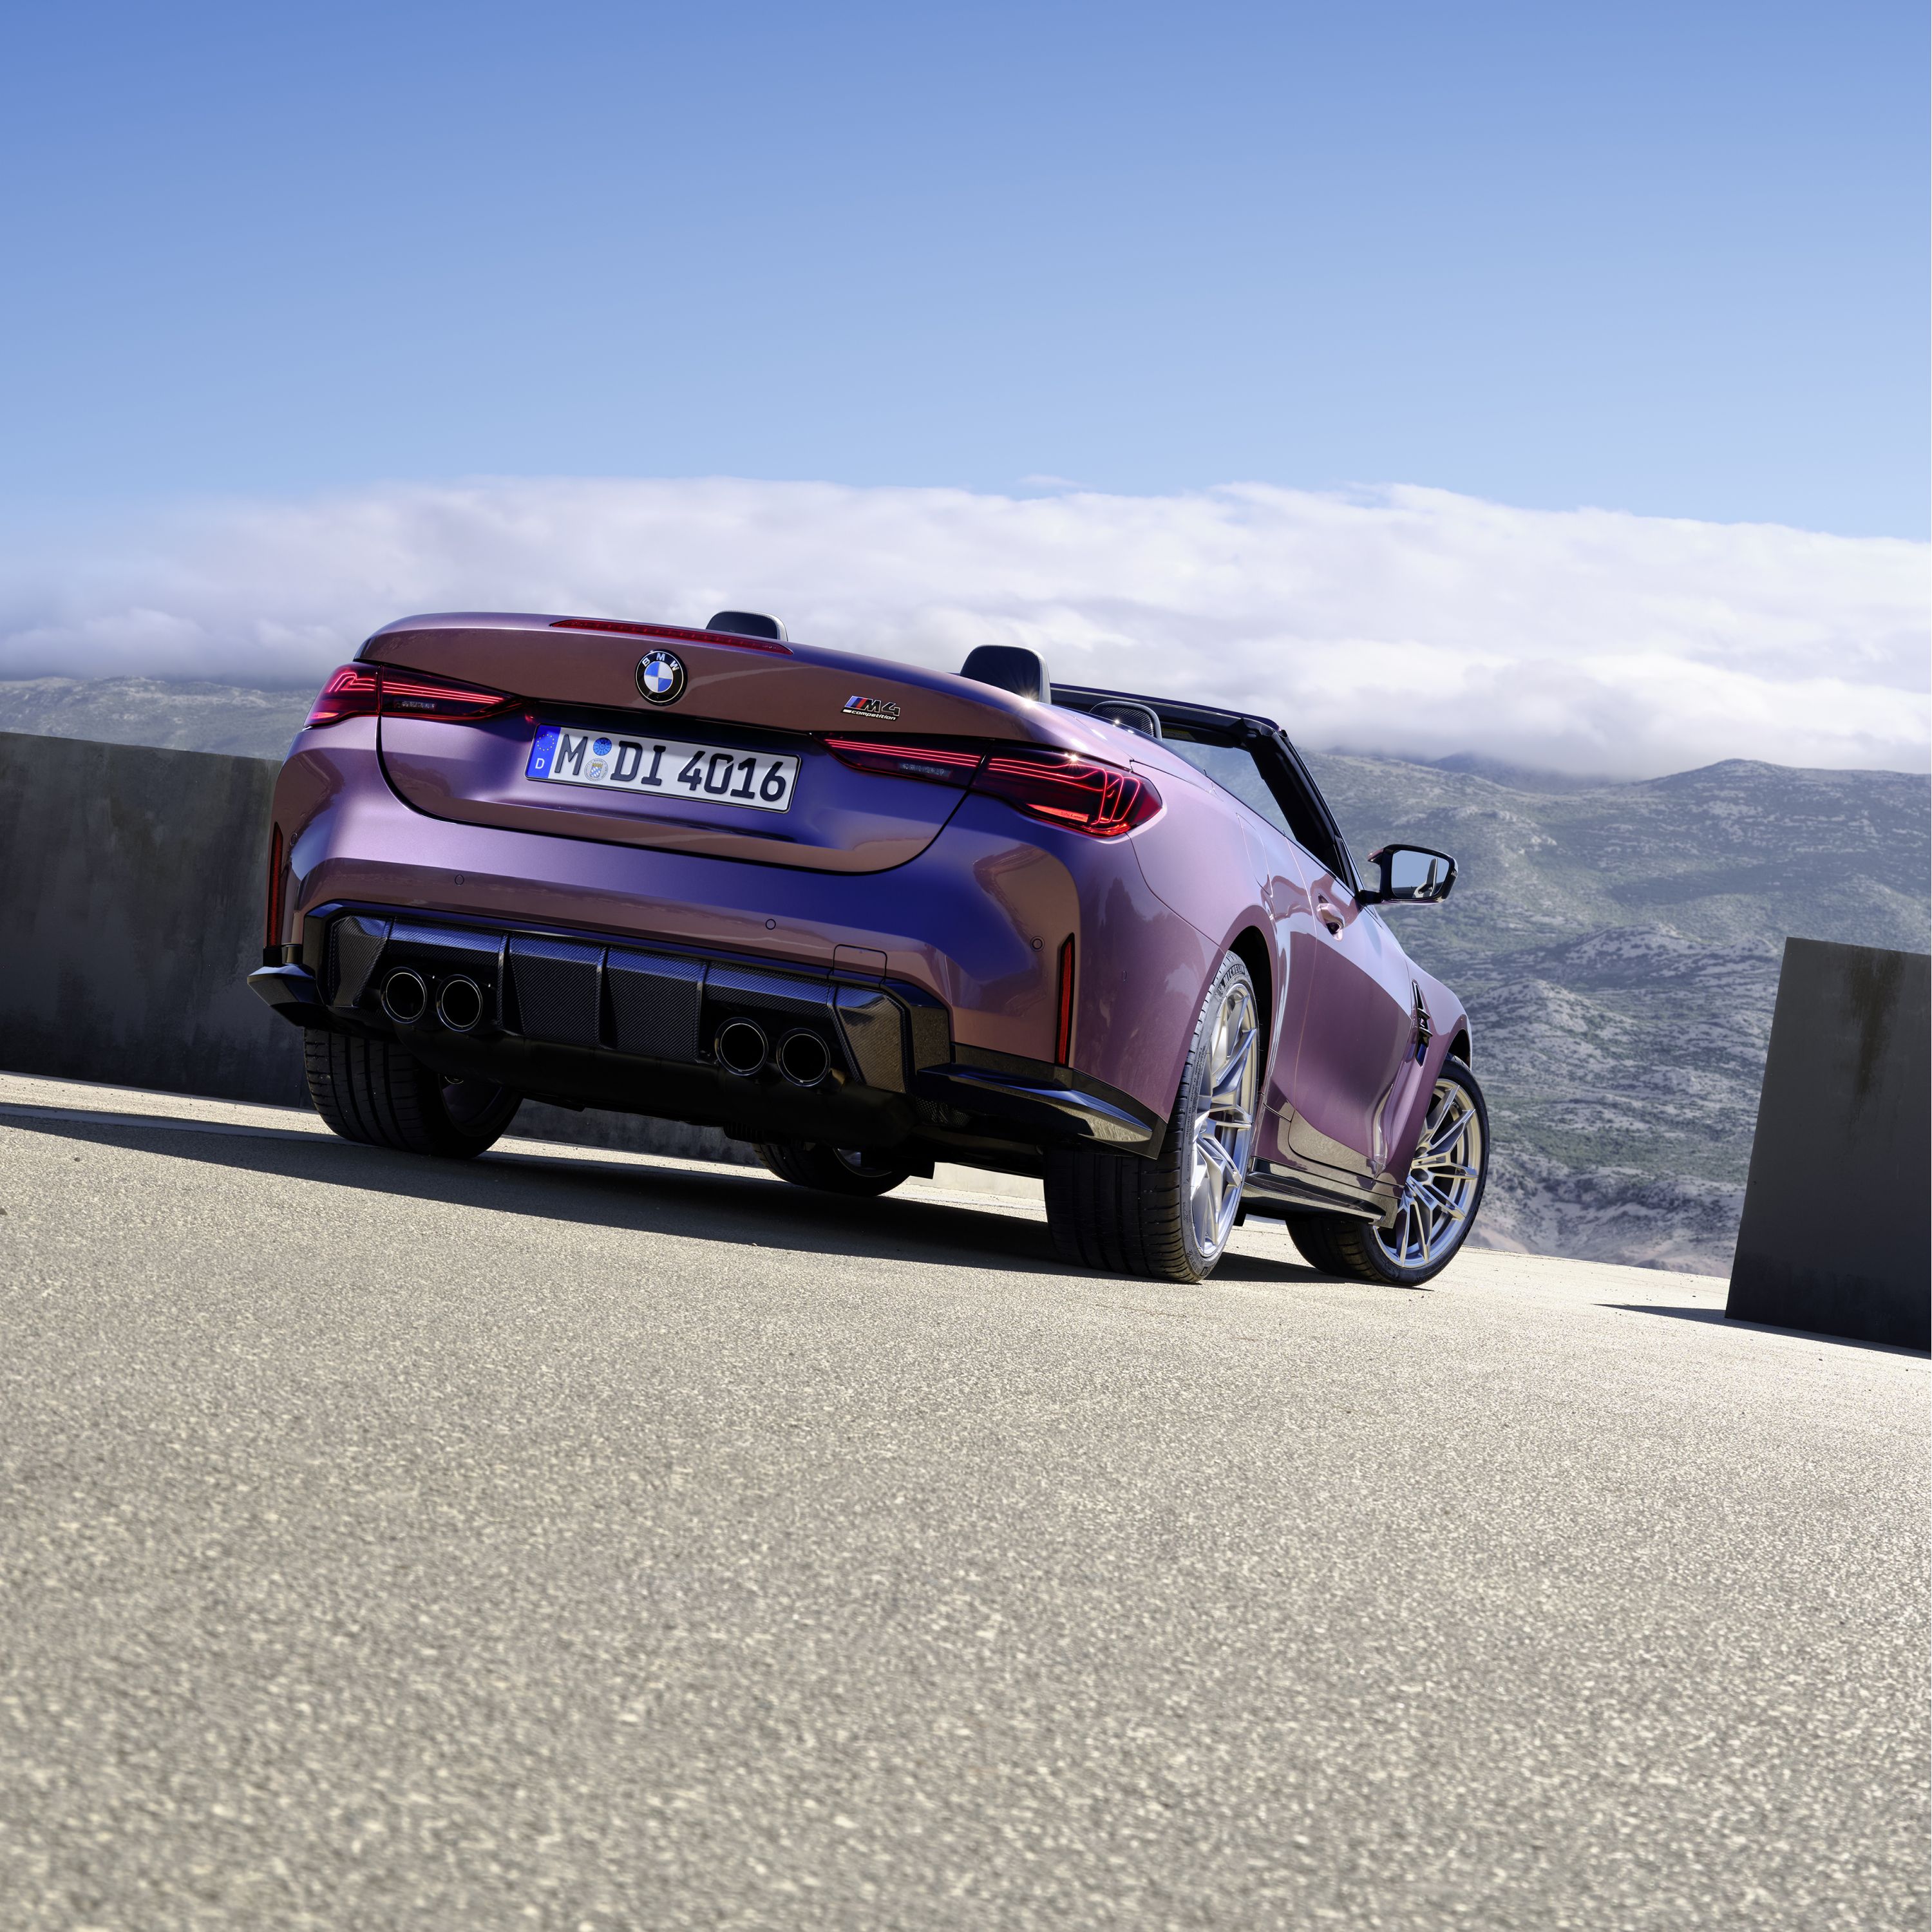 Modely M vozidiel BMW radu 4 Cabrio: financovanie a lízing